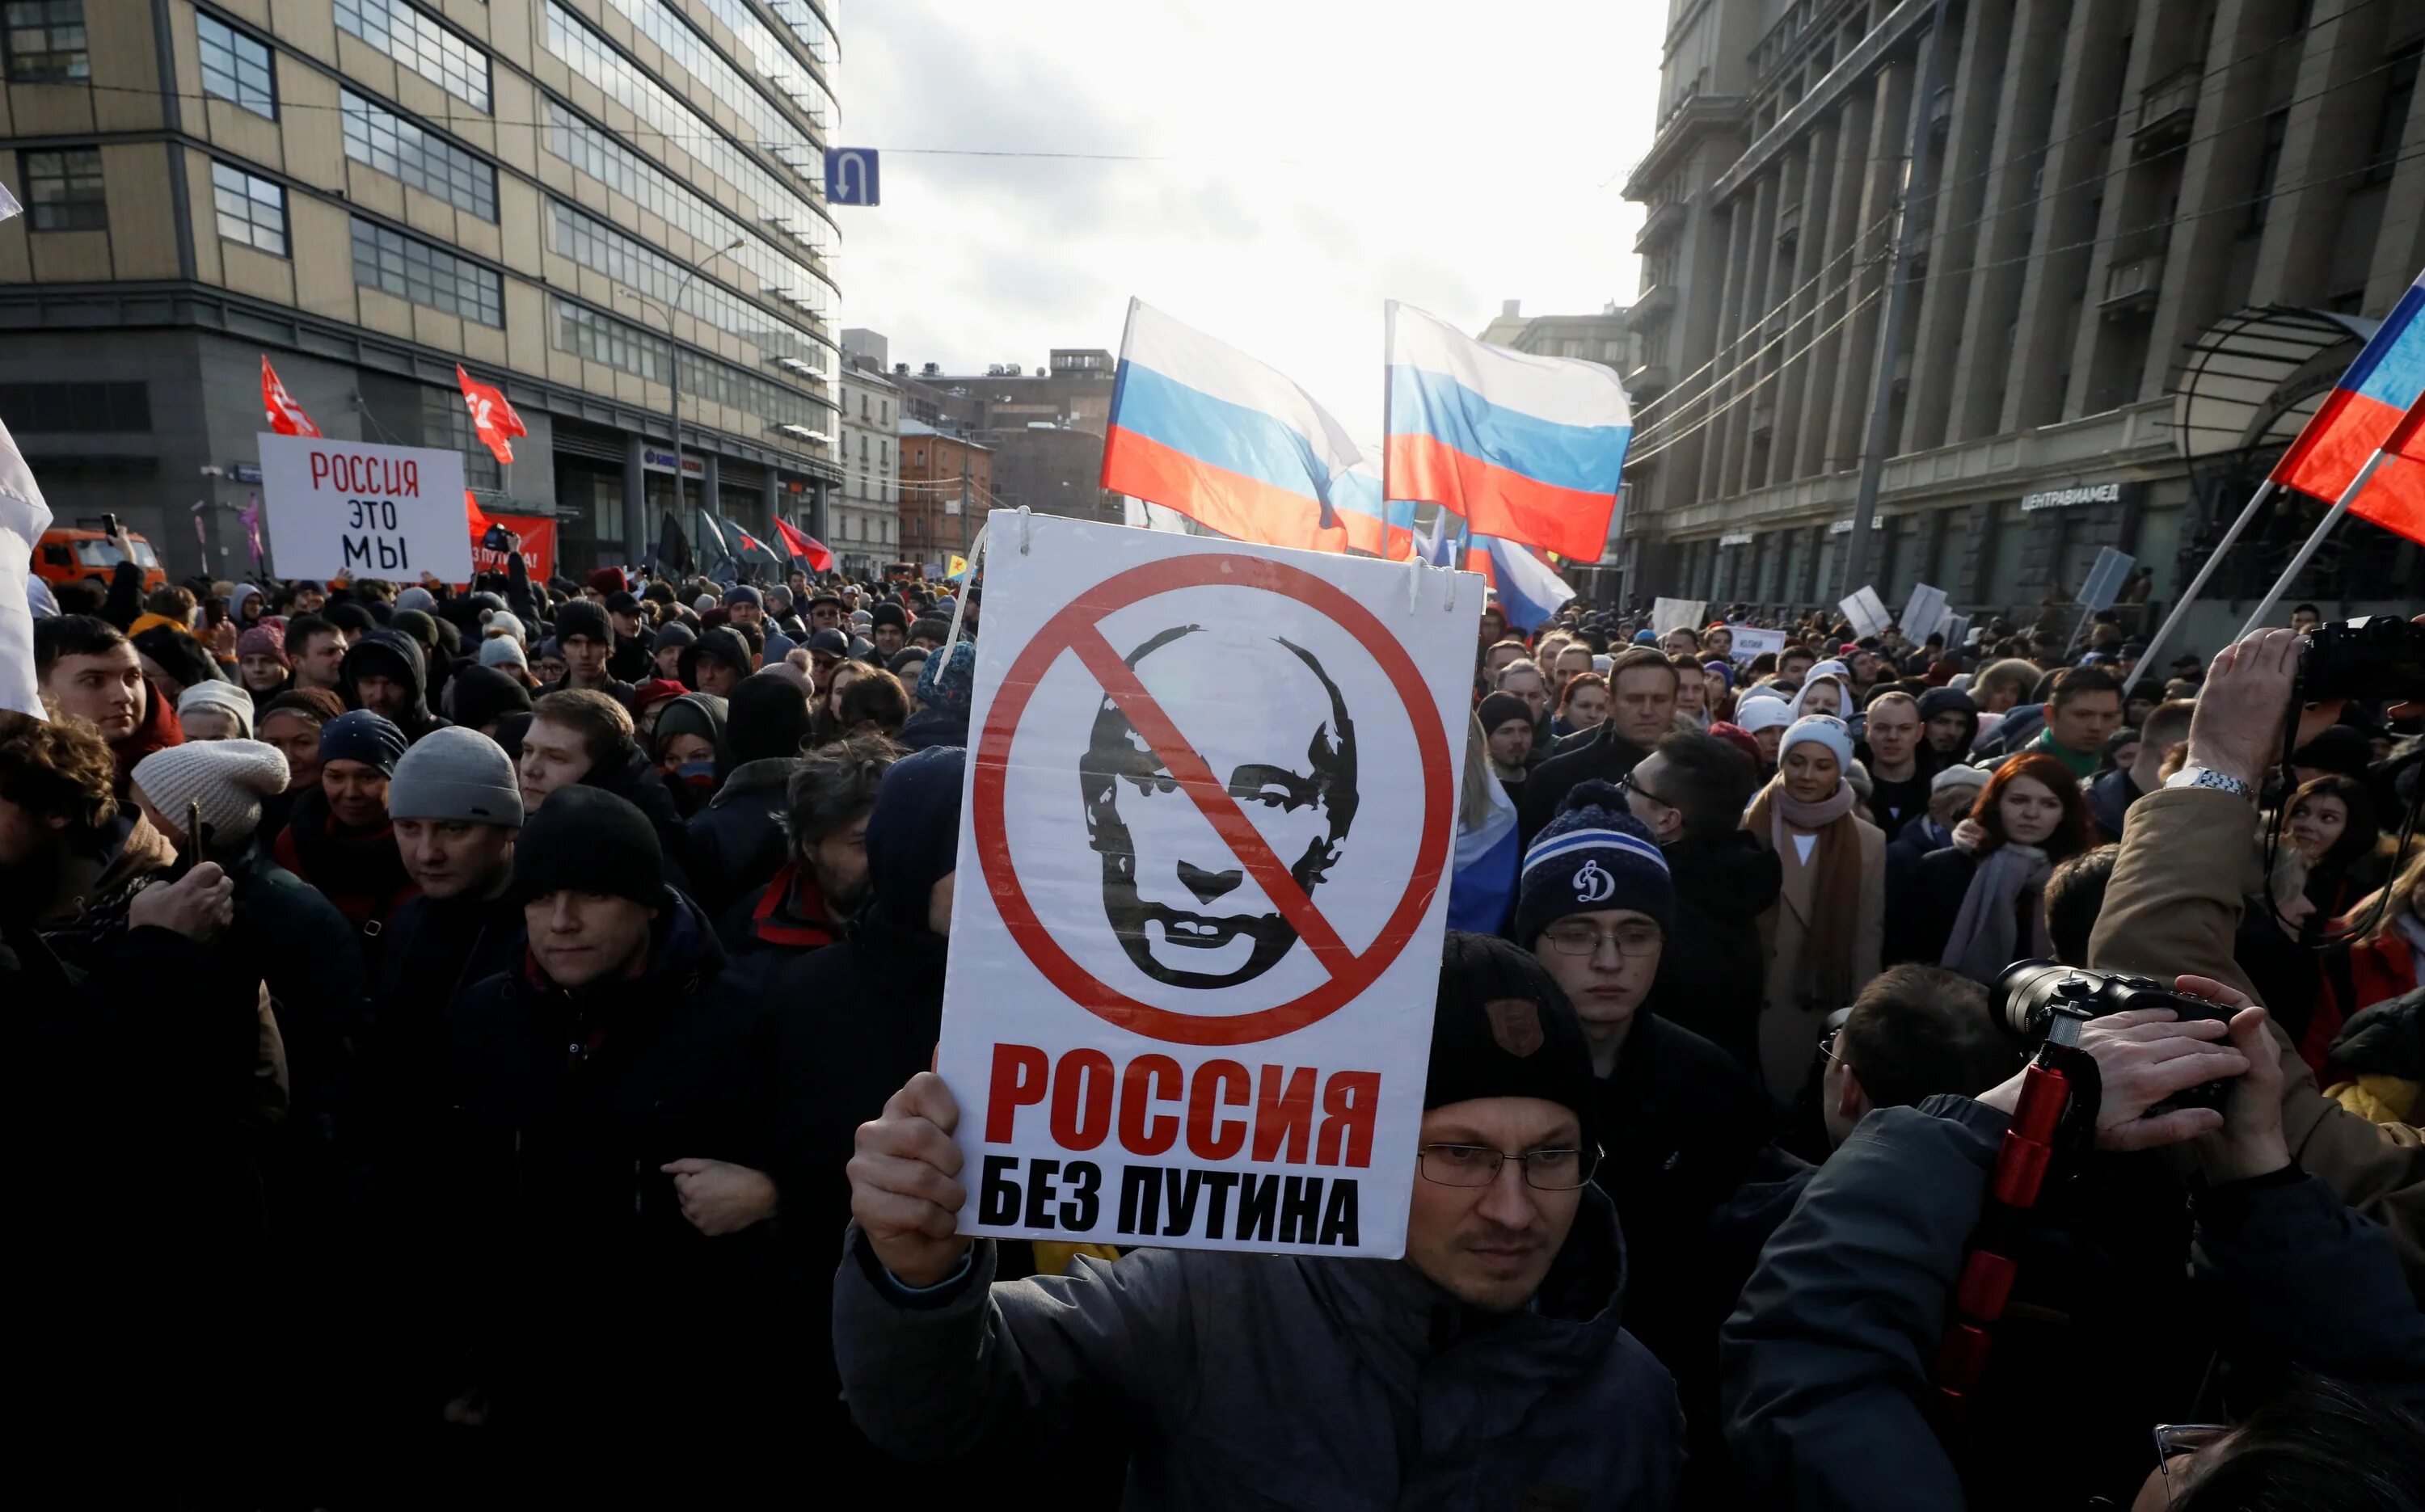 Митинг против Путина. Митинги в России против Путина. Митинги в Москве против Путина. Россия без Путина митинги.